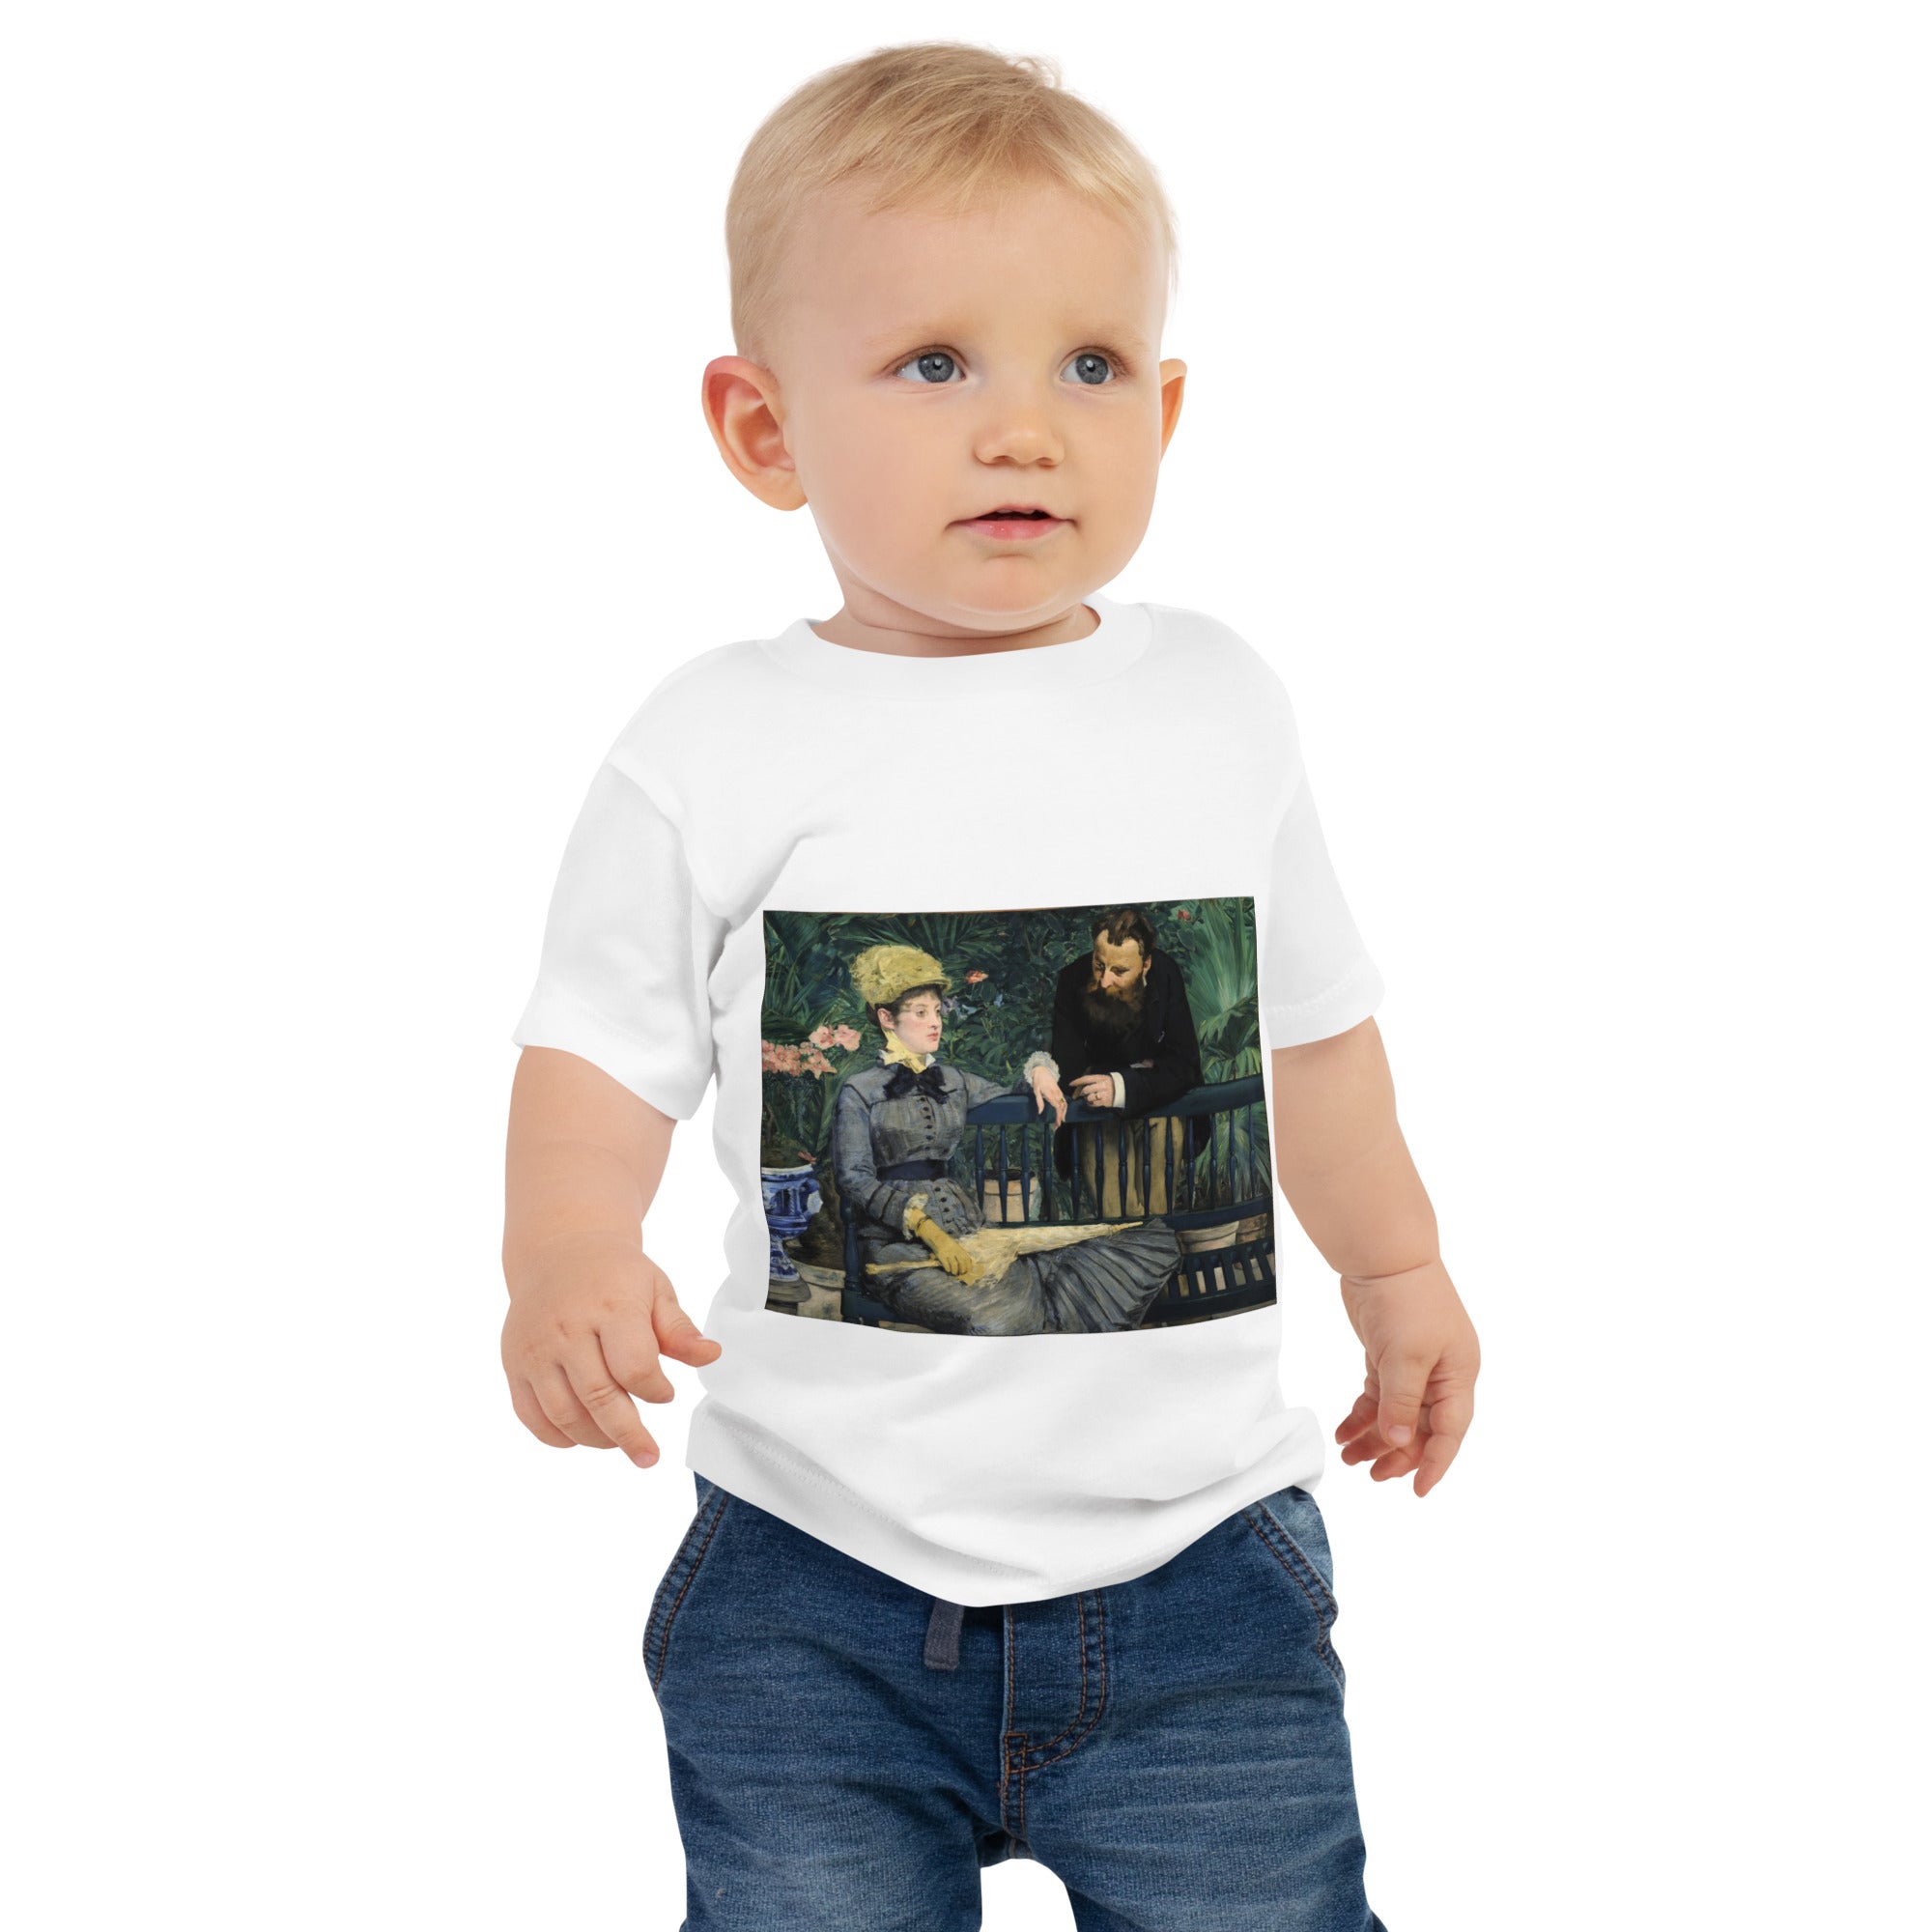 Édouard Manet „Im Wintergarten“, berühmtes Gemälde, Baby-T-Shirt, Premium-Kunst-T-Shirt für Babys 